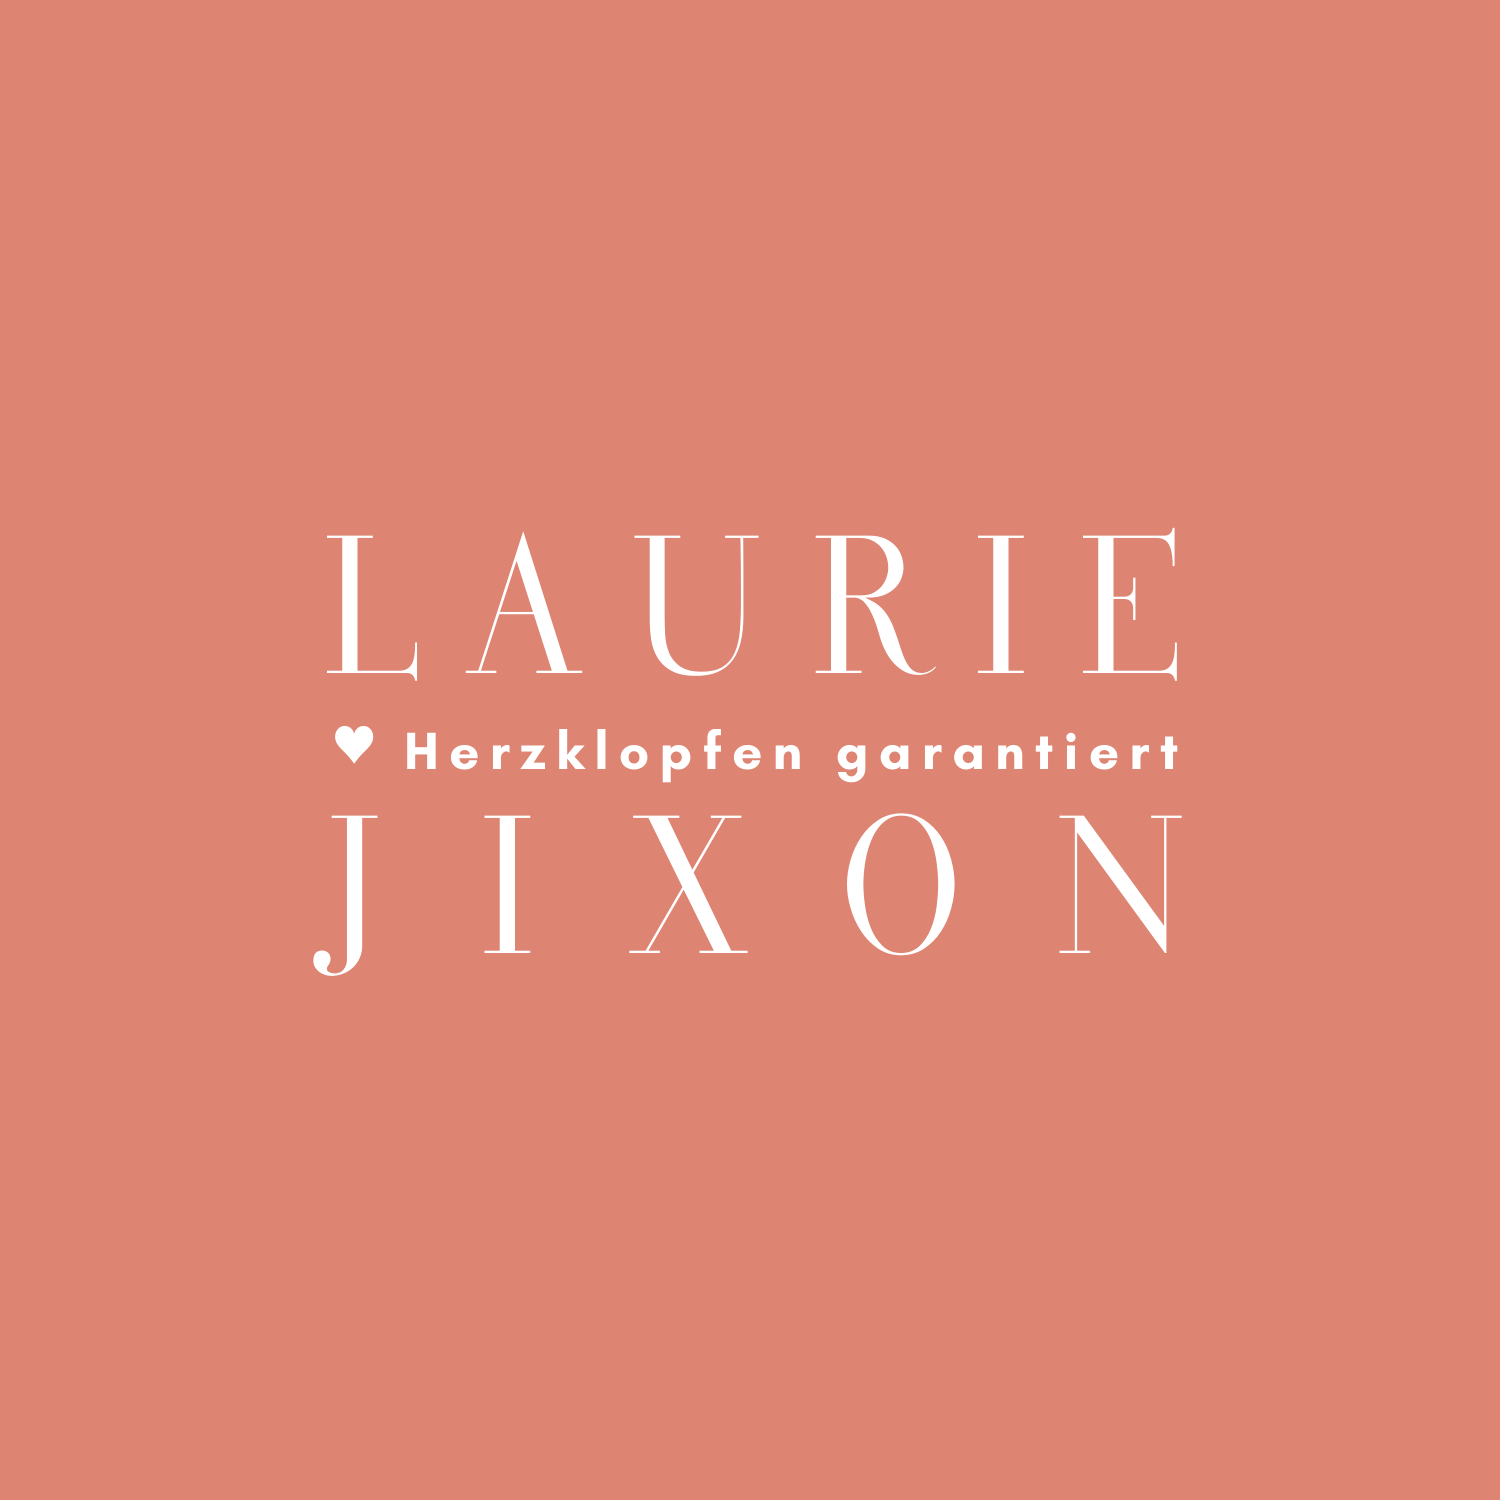 Laurie Jixon